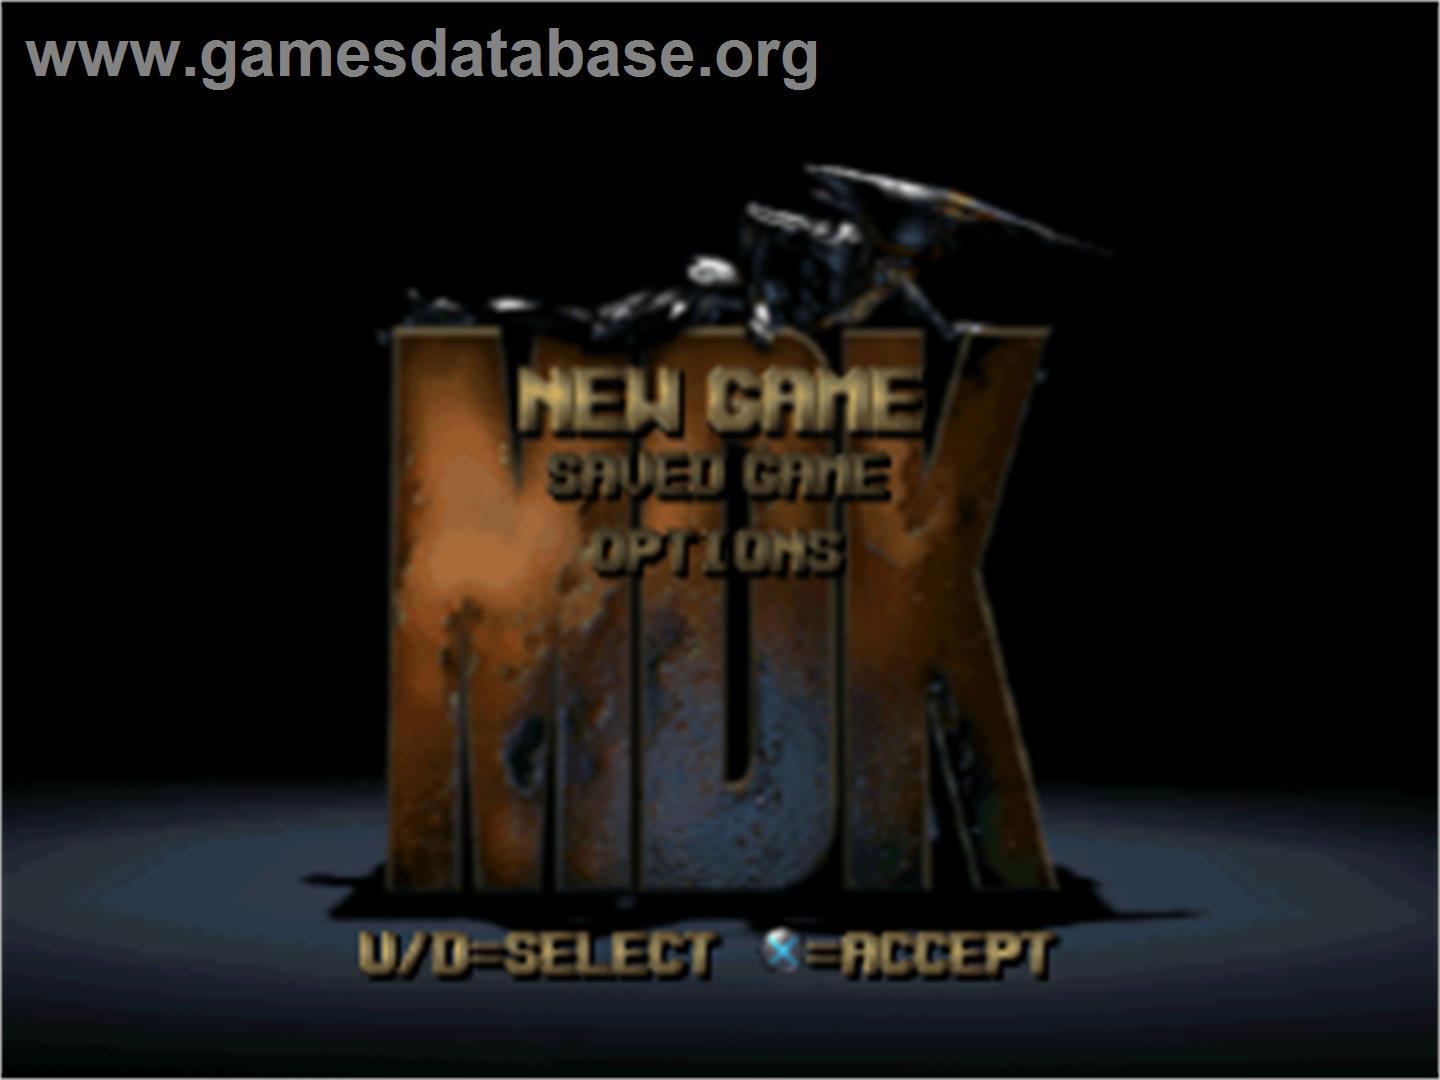 MDK - Sony Playstation - Artwork - Title Screen